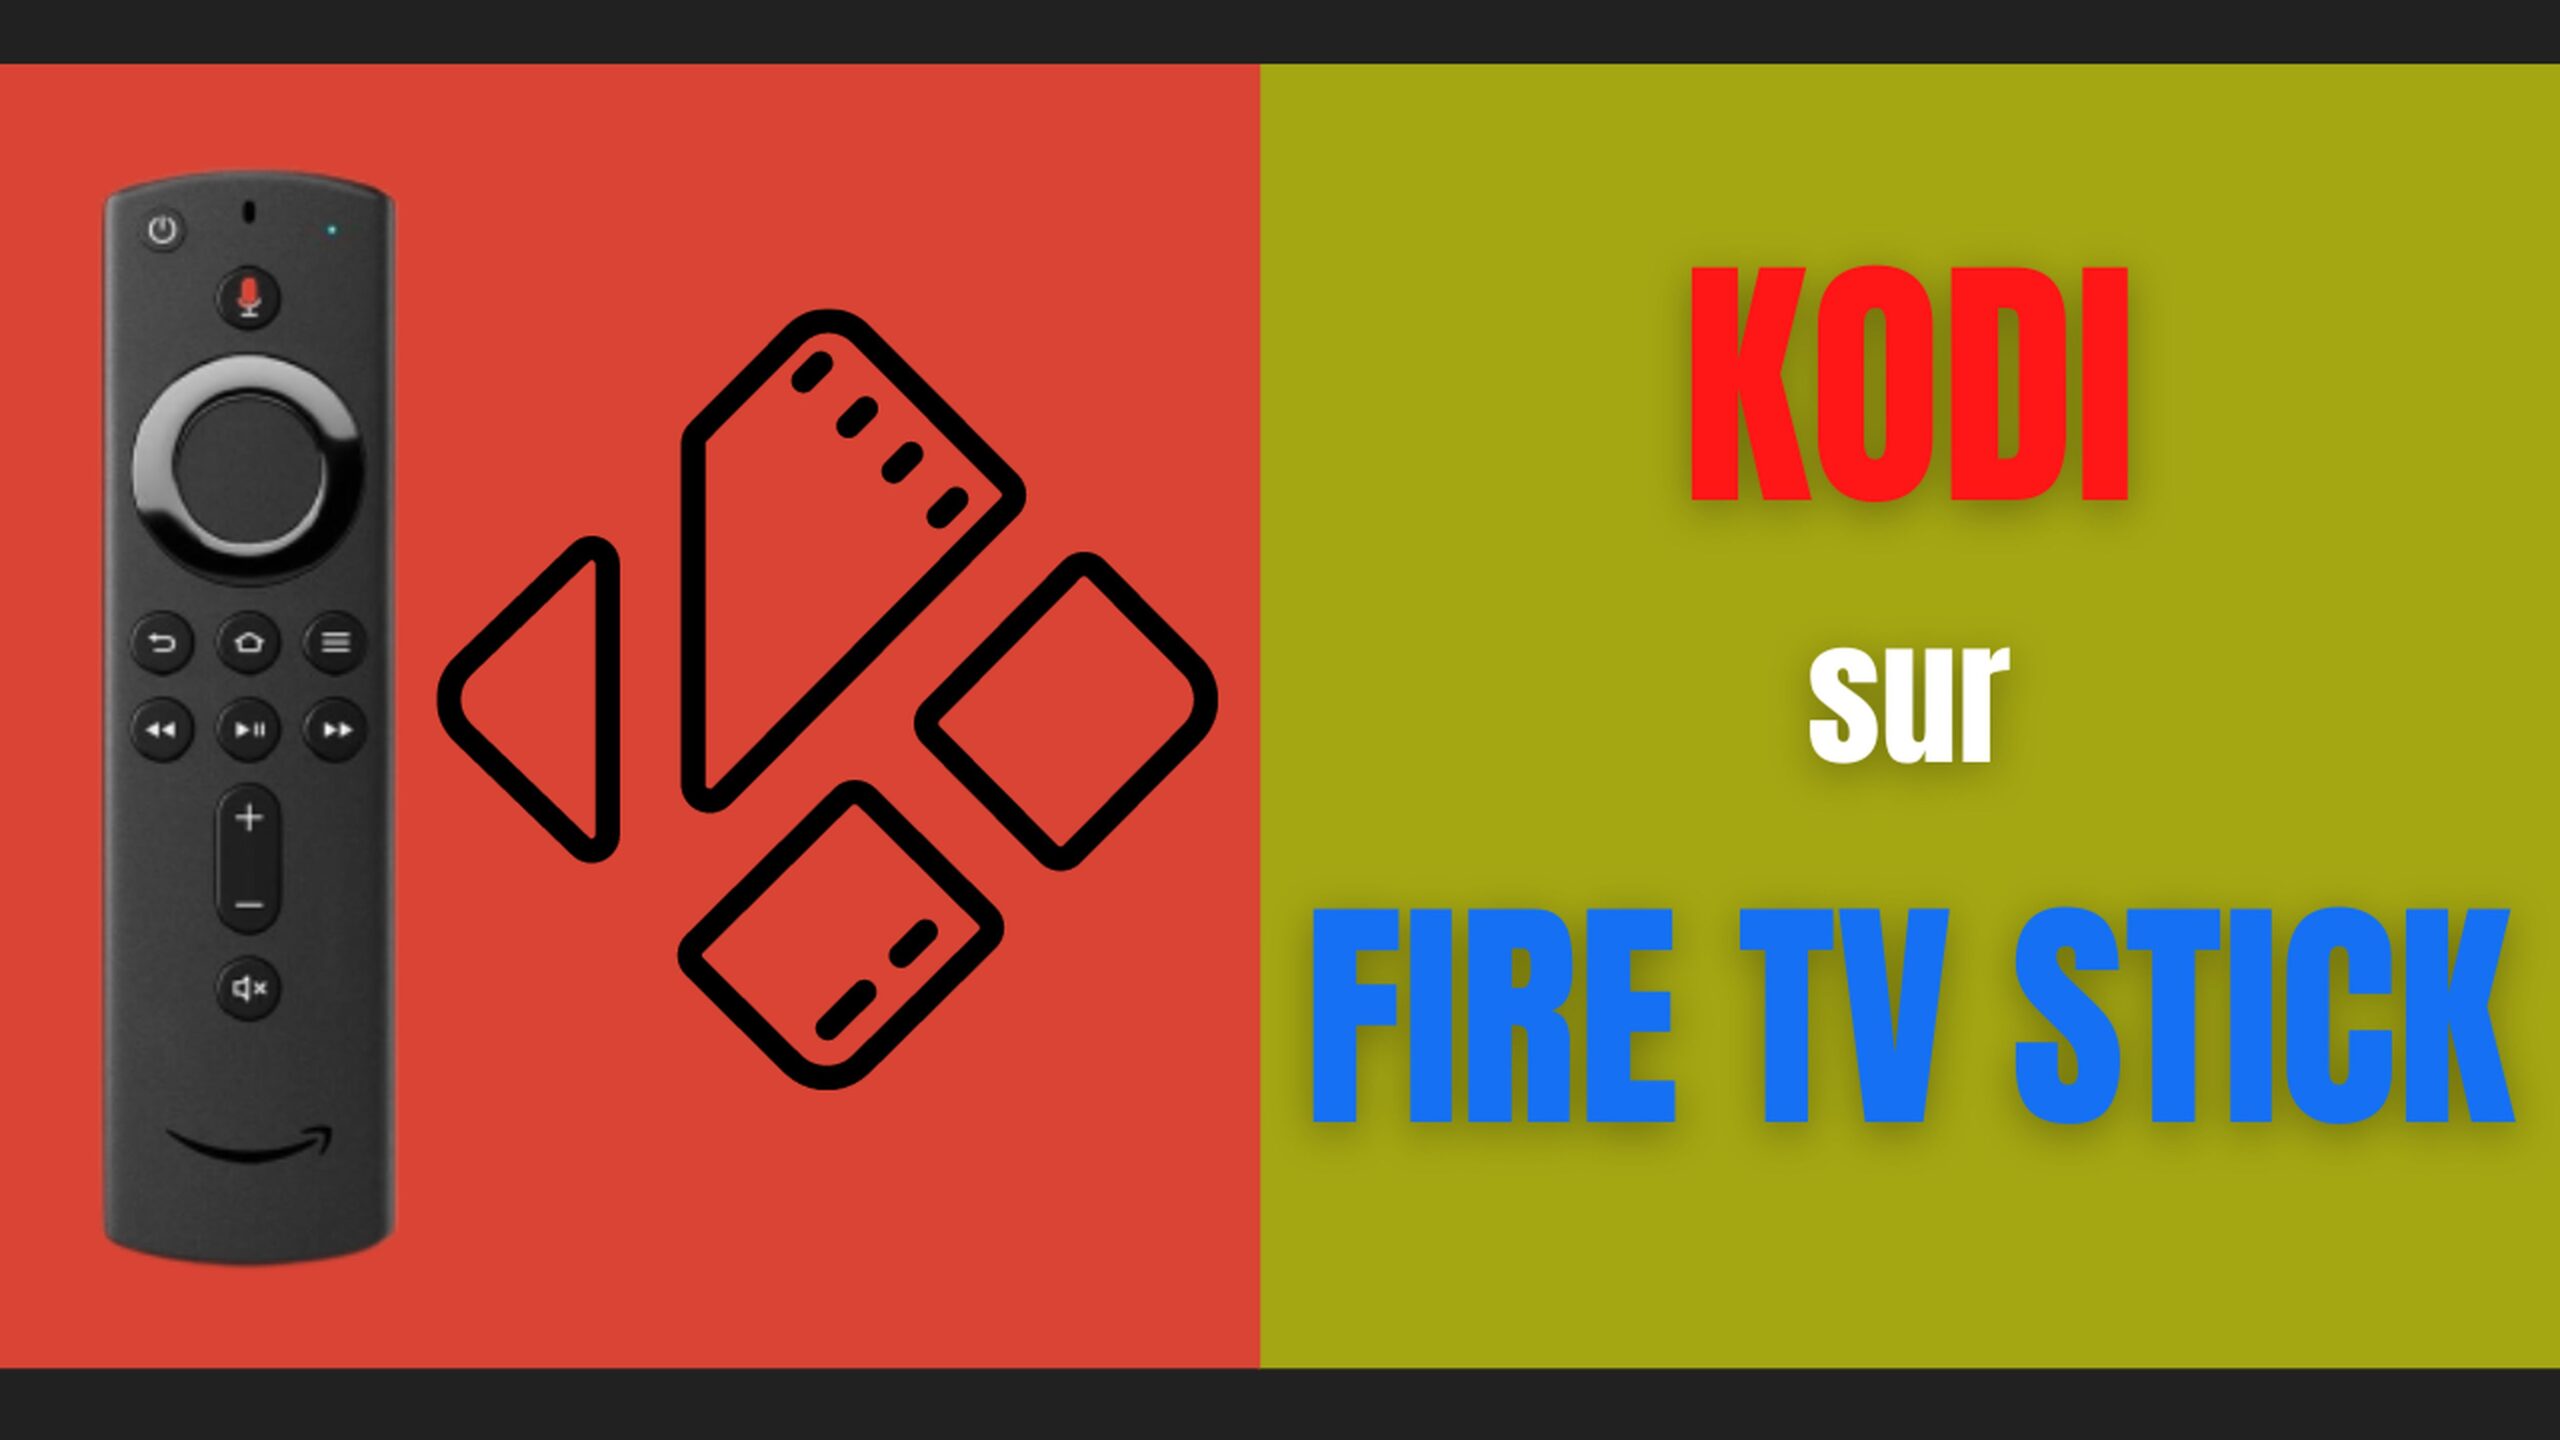 KODI sur Fire TV Stick d' Amazon 2